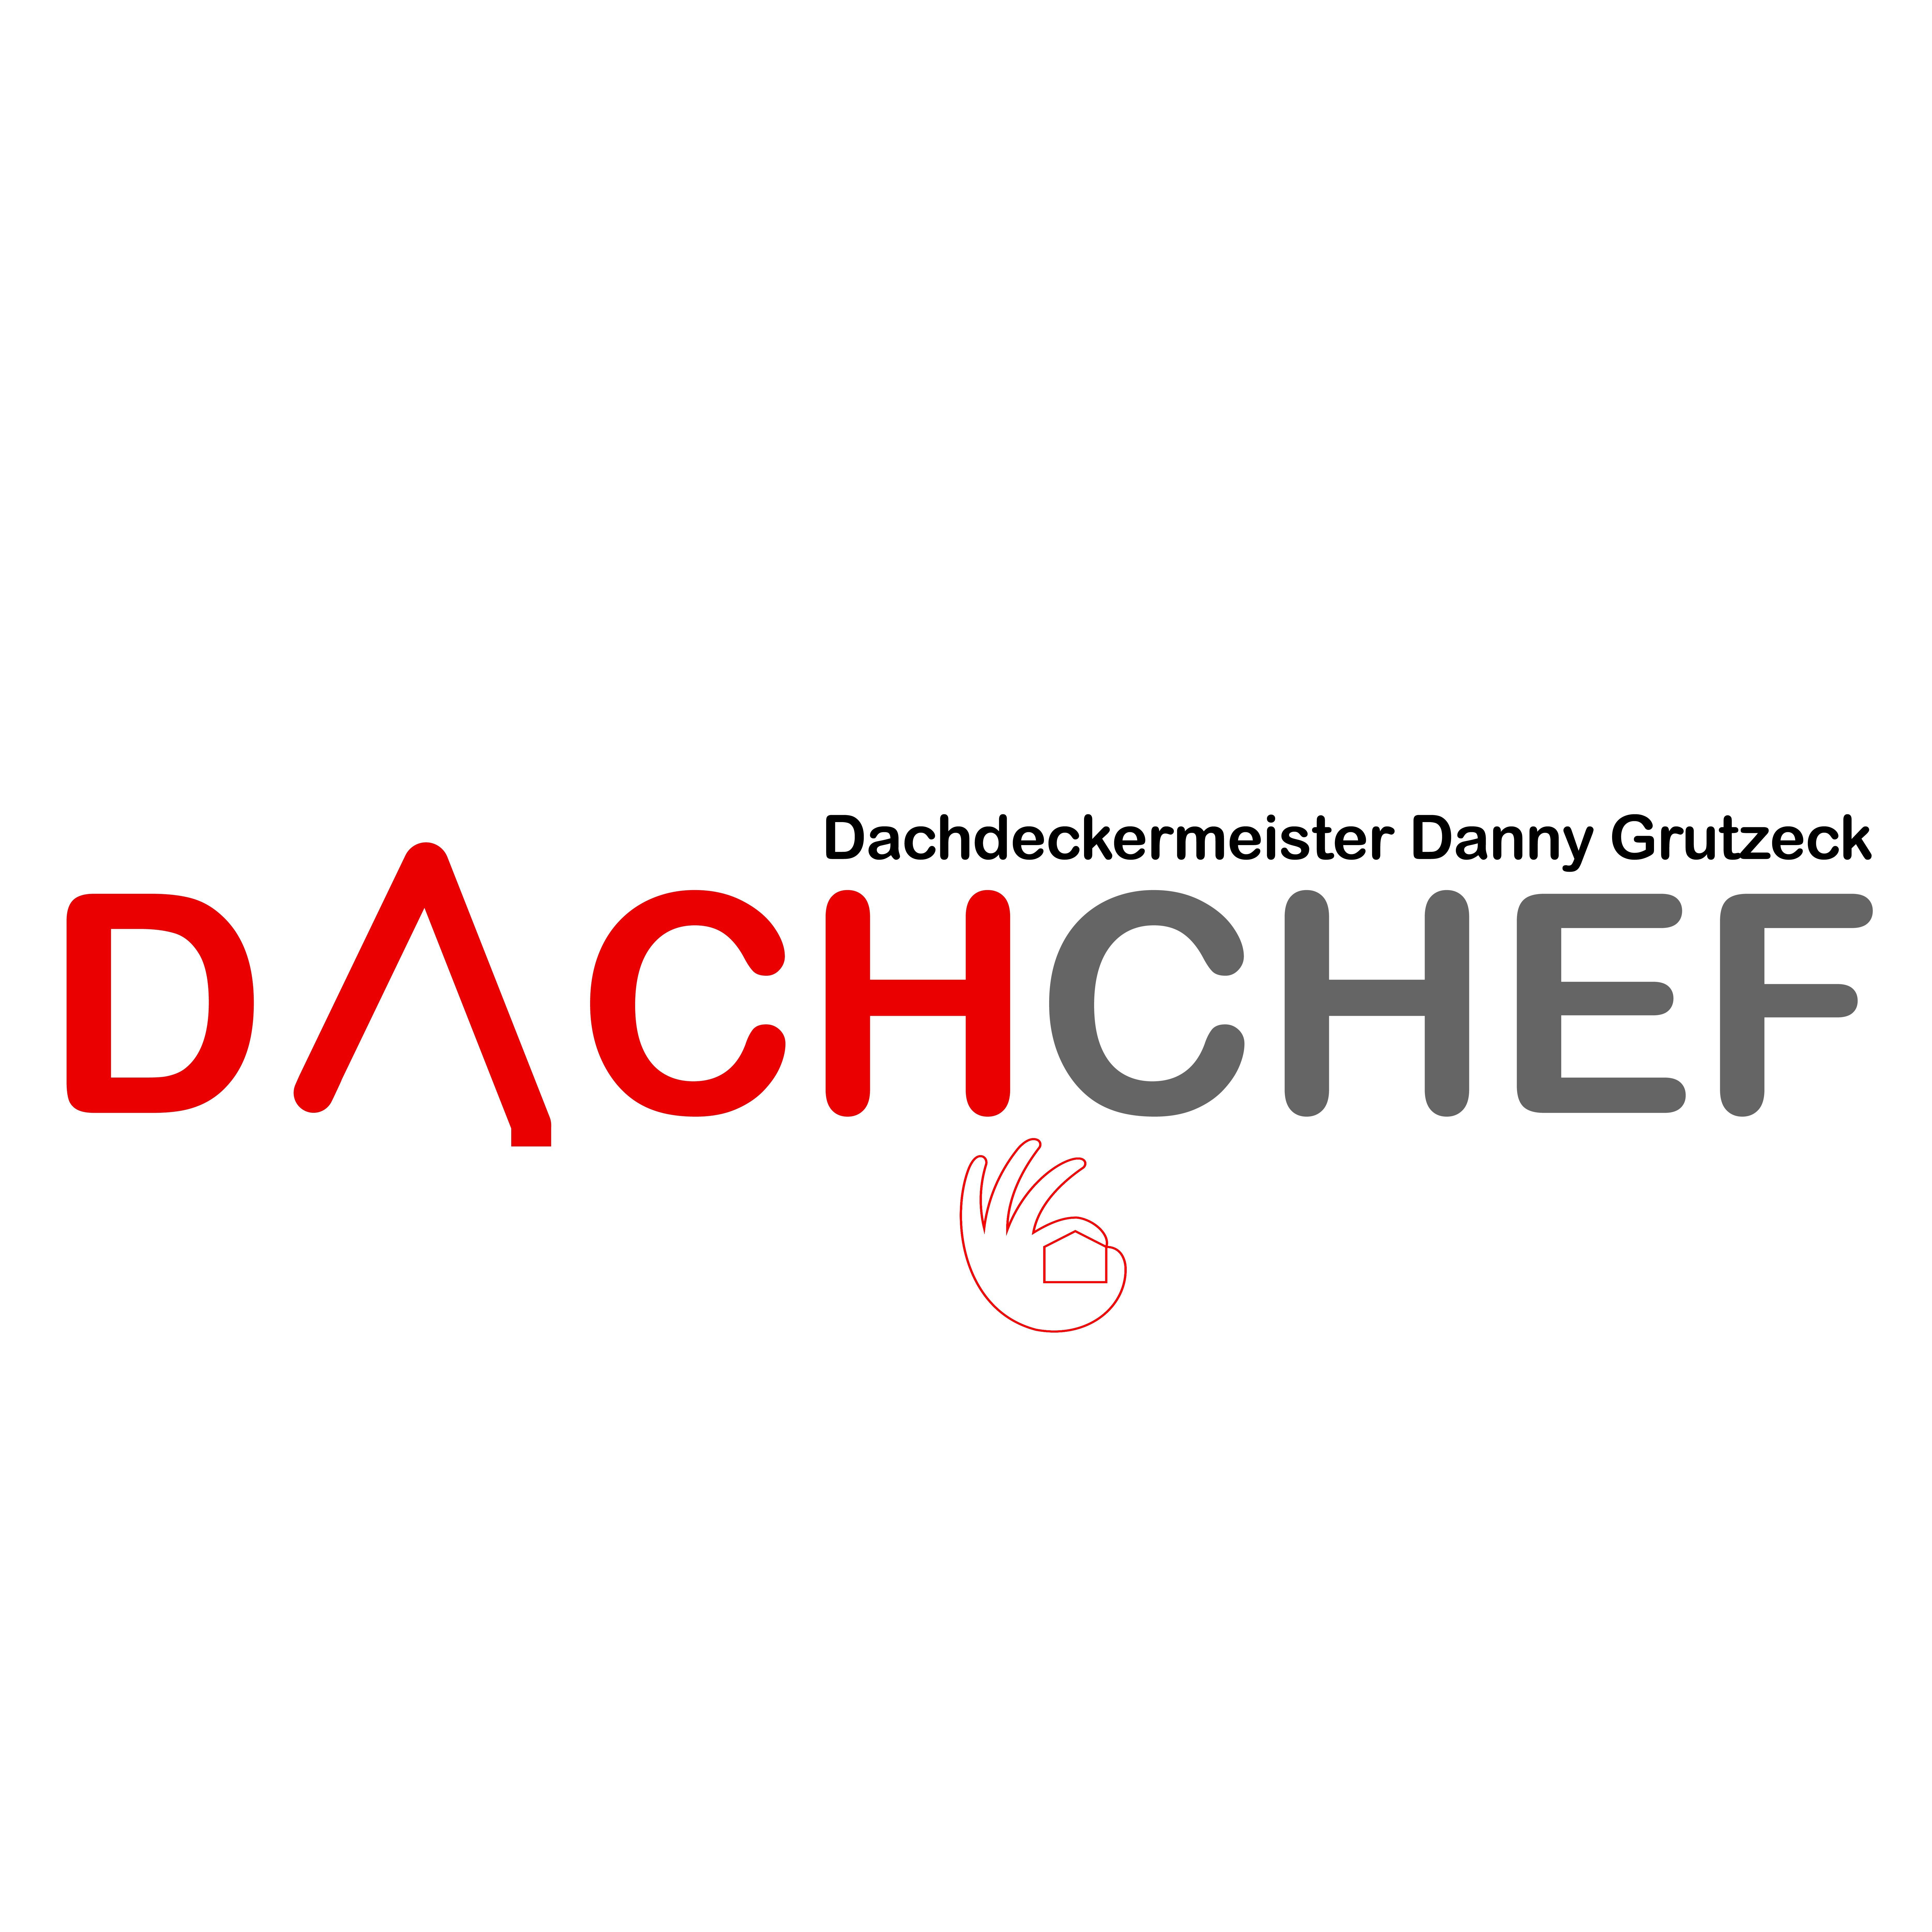 Dachchef Dachdeckermeister Danny Grutzeck Logo